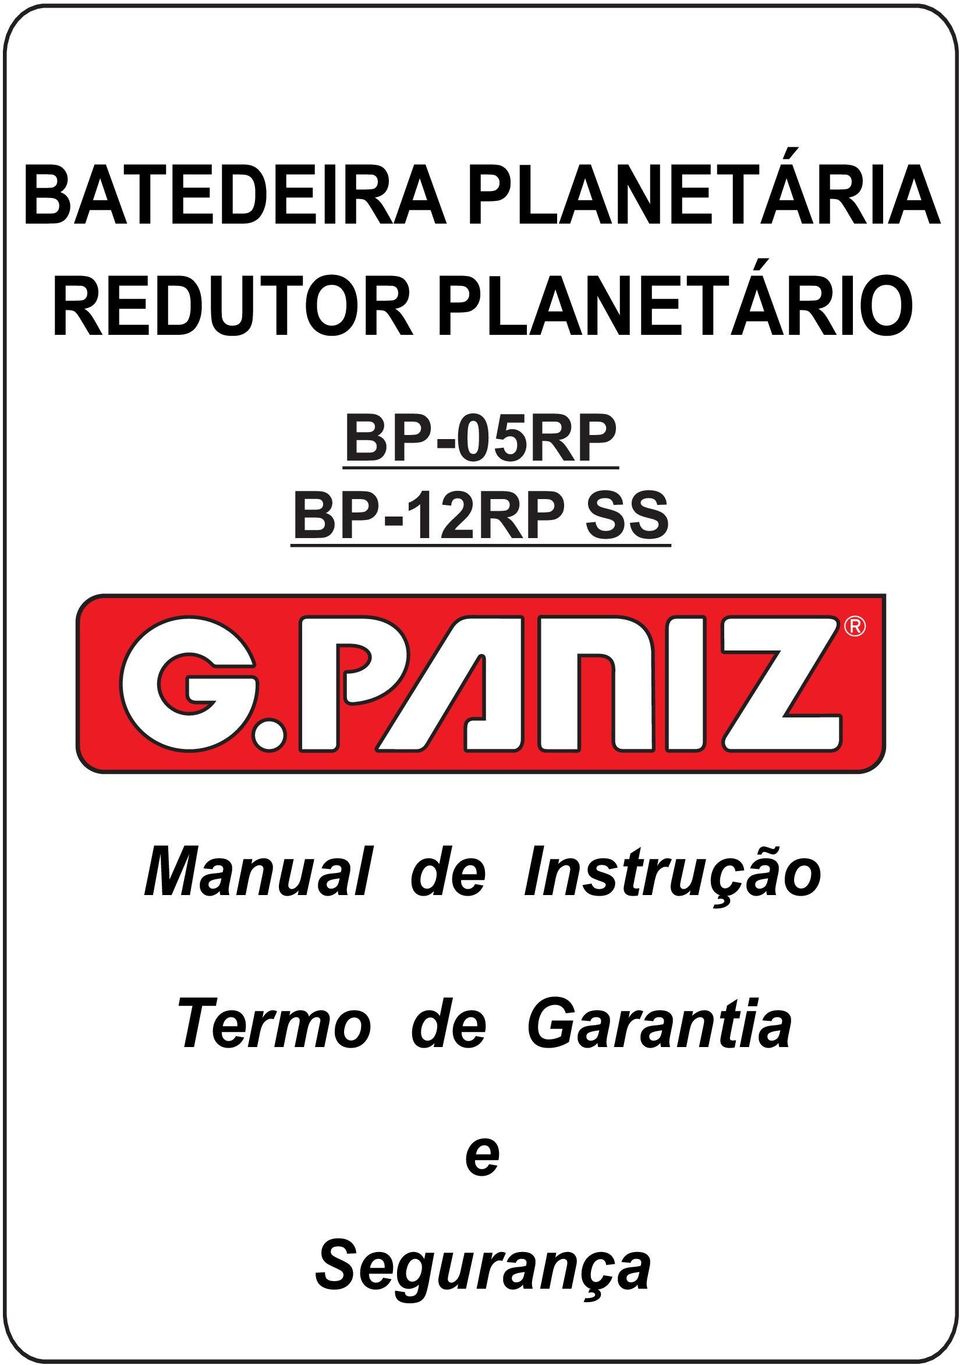 BP-12RP SS Manual de